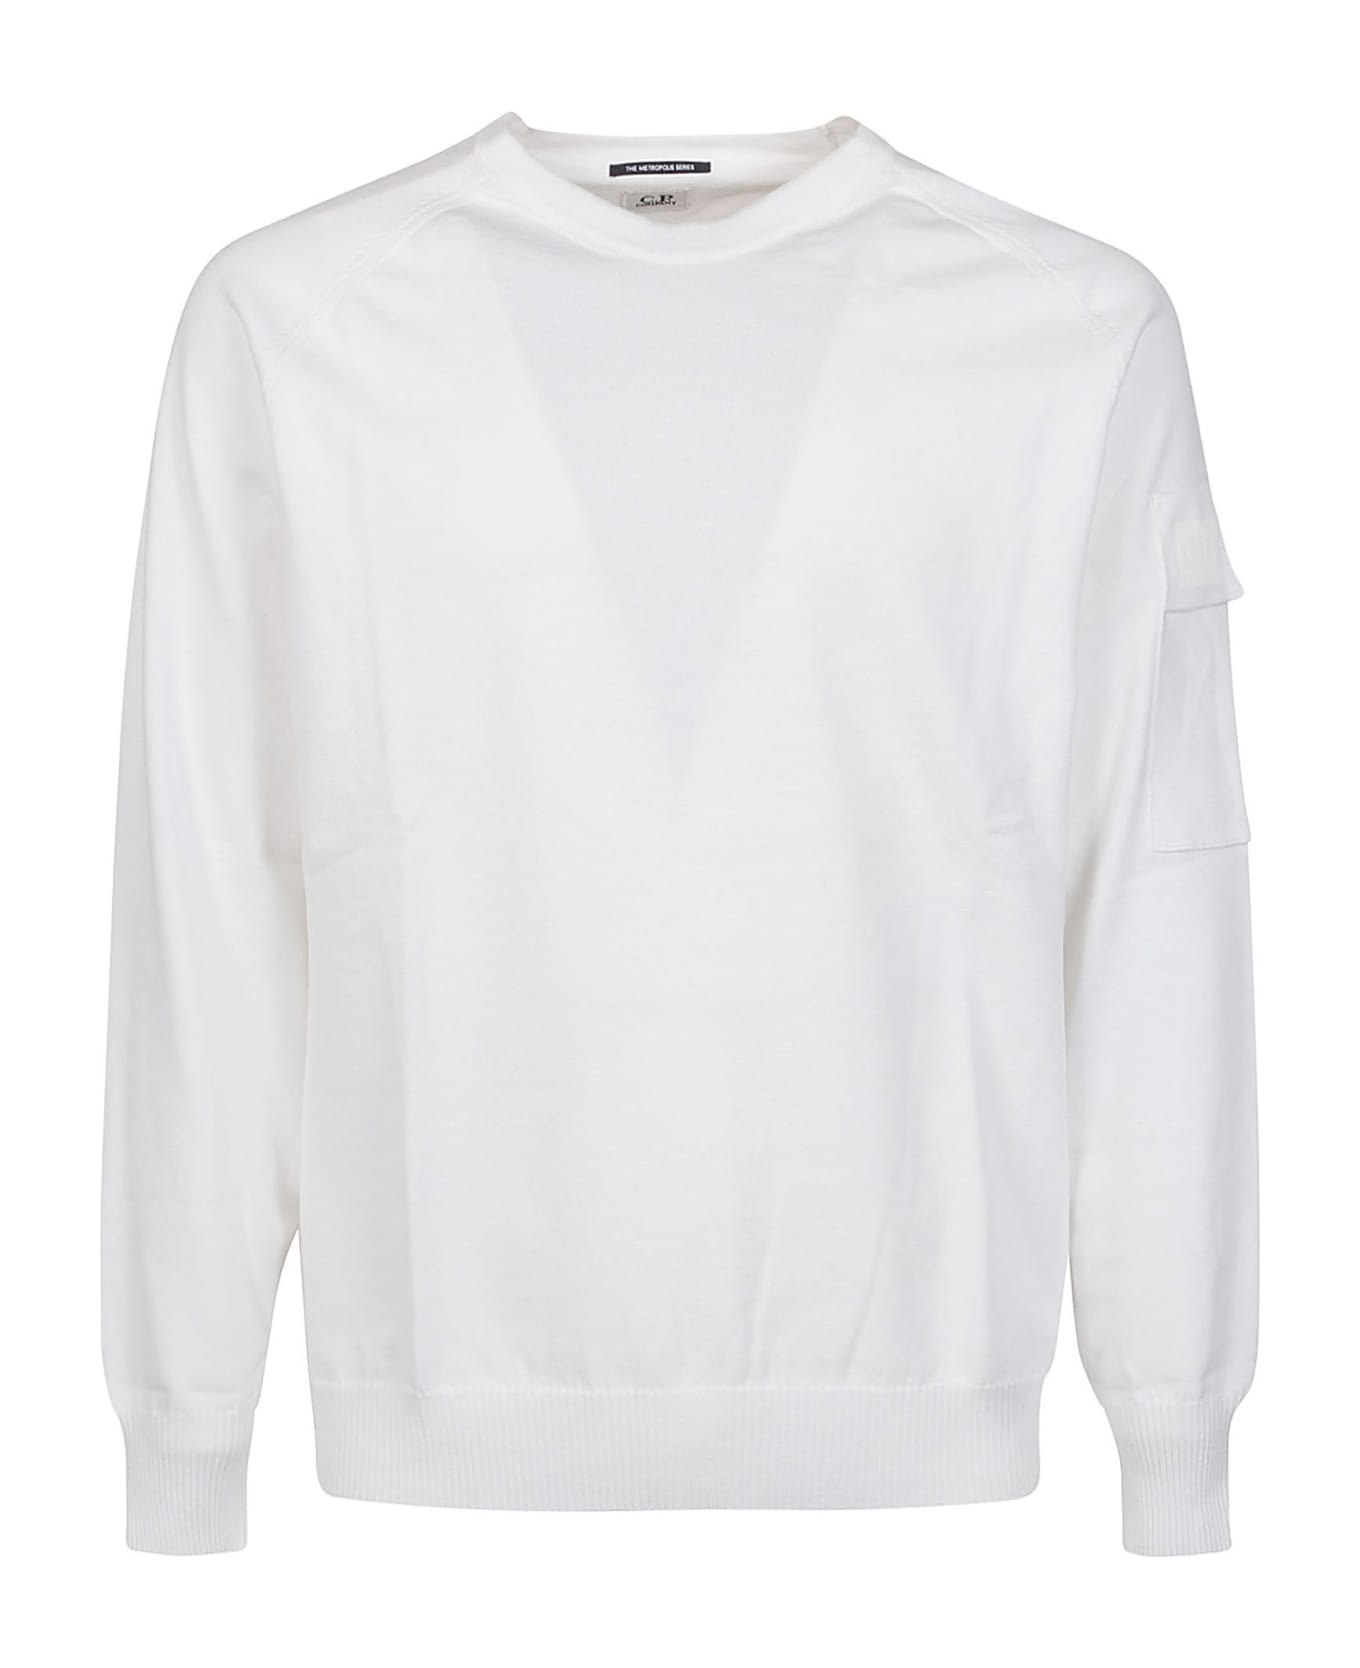 C.P. Company Metropolis Stretch Pocket Sweater - White